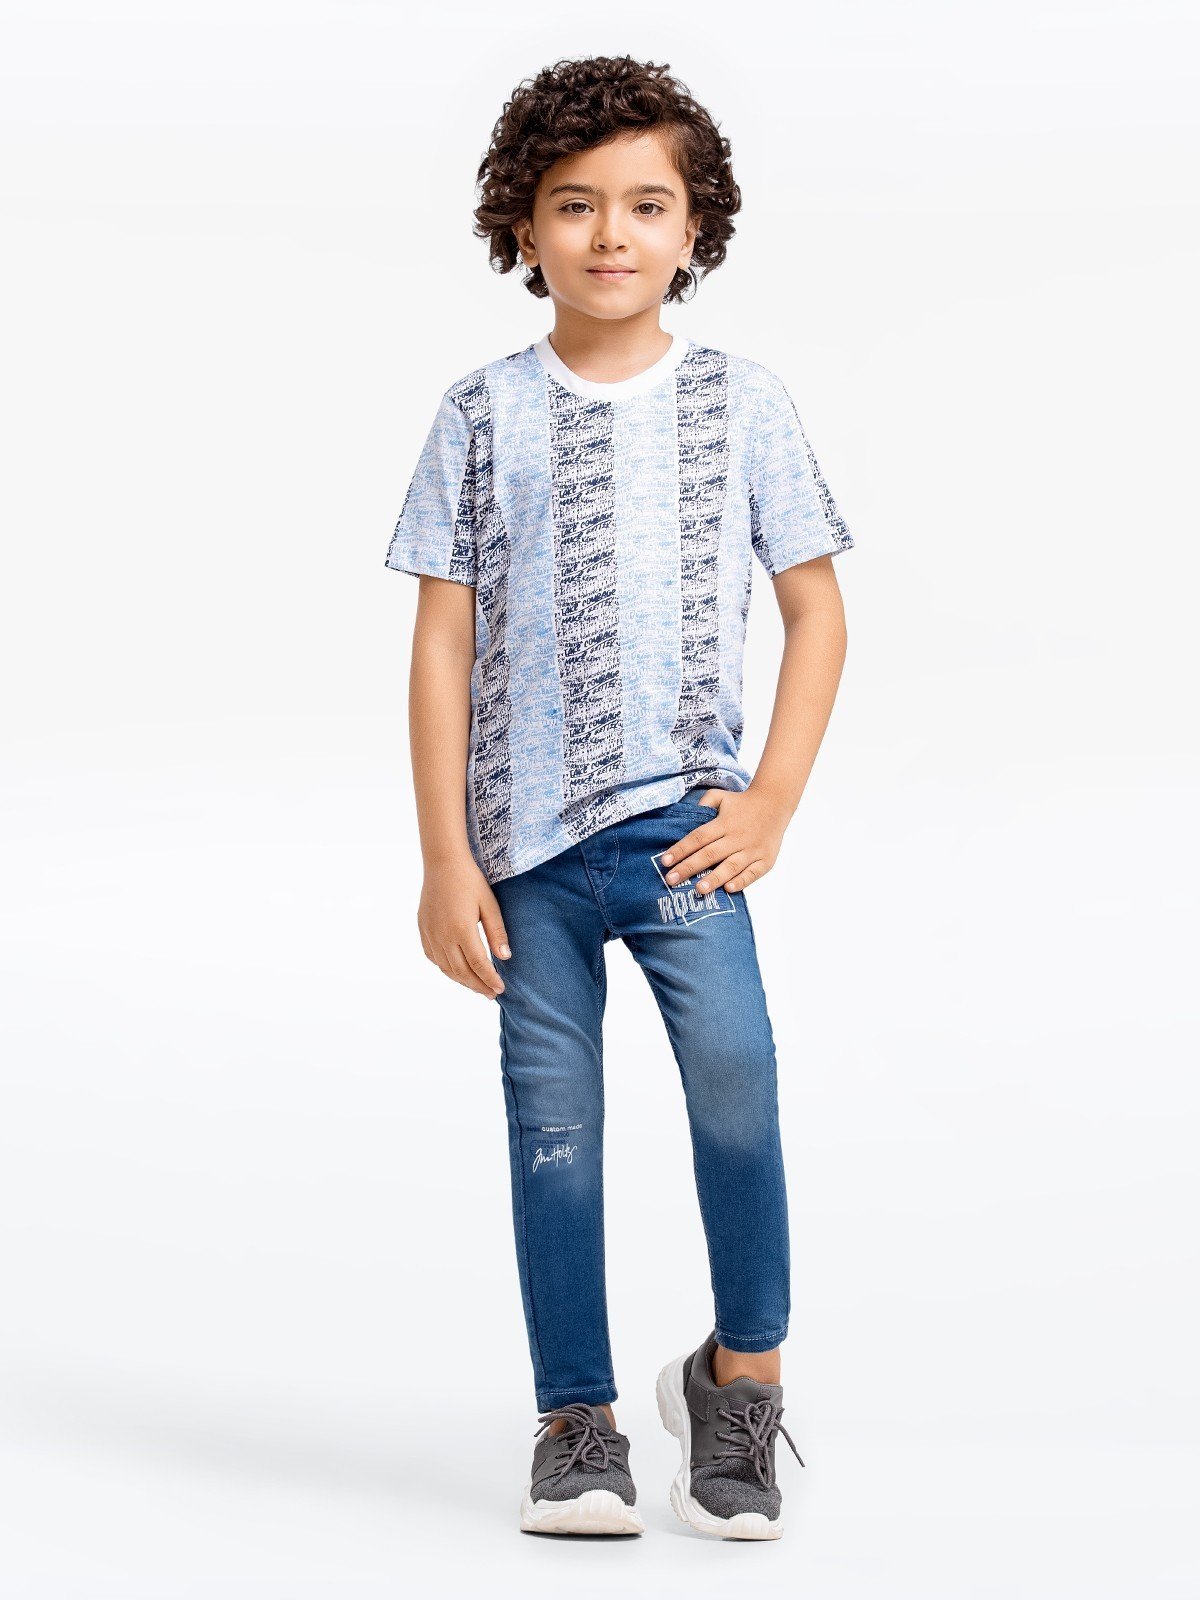 Boy's White & Blue T-Shirt - EBTTS23-043